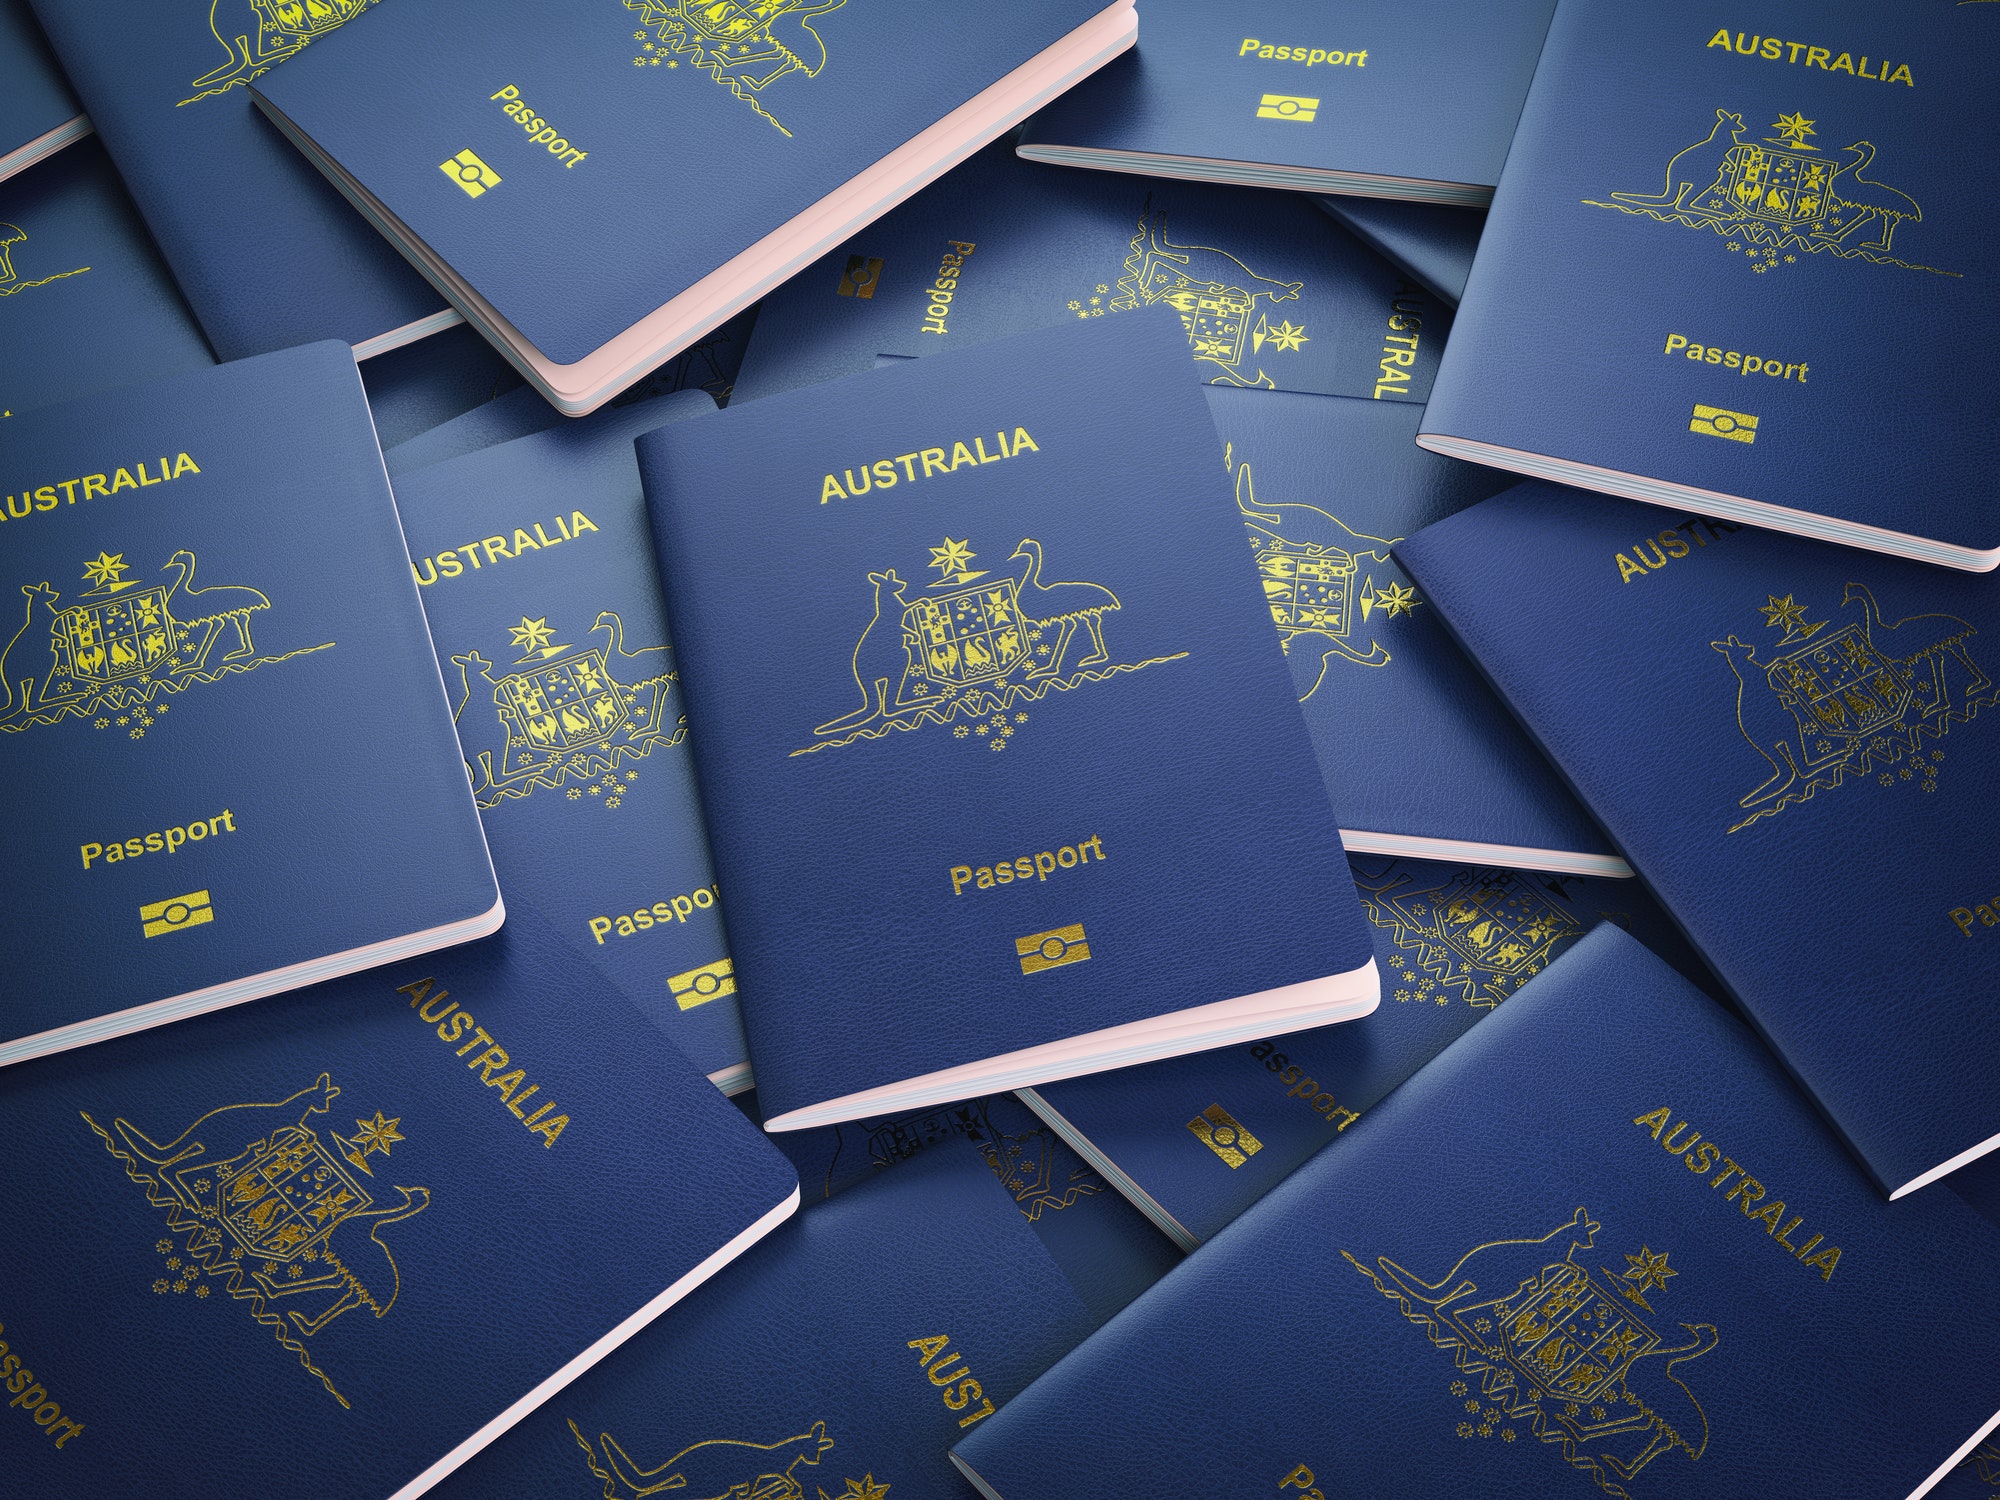 SBS NEWS: Australian visas: What’s changing in 2019?